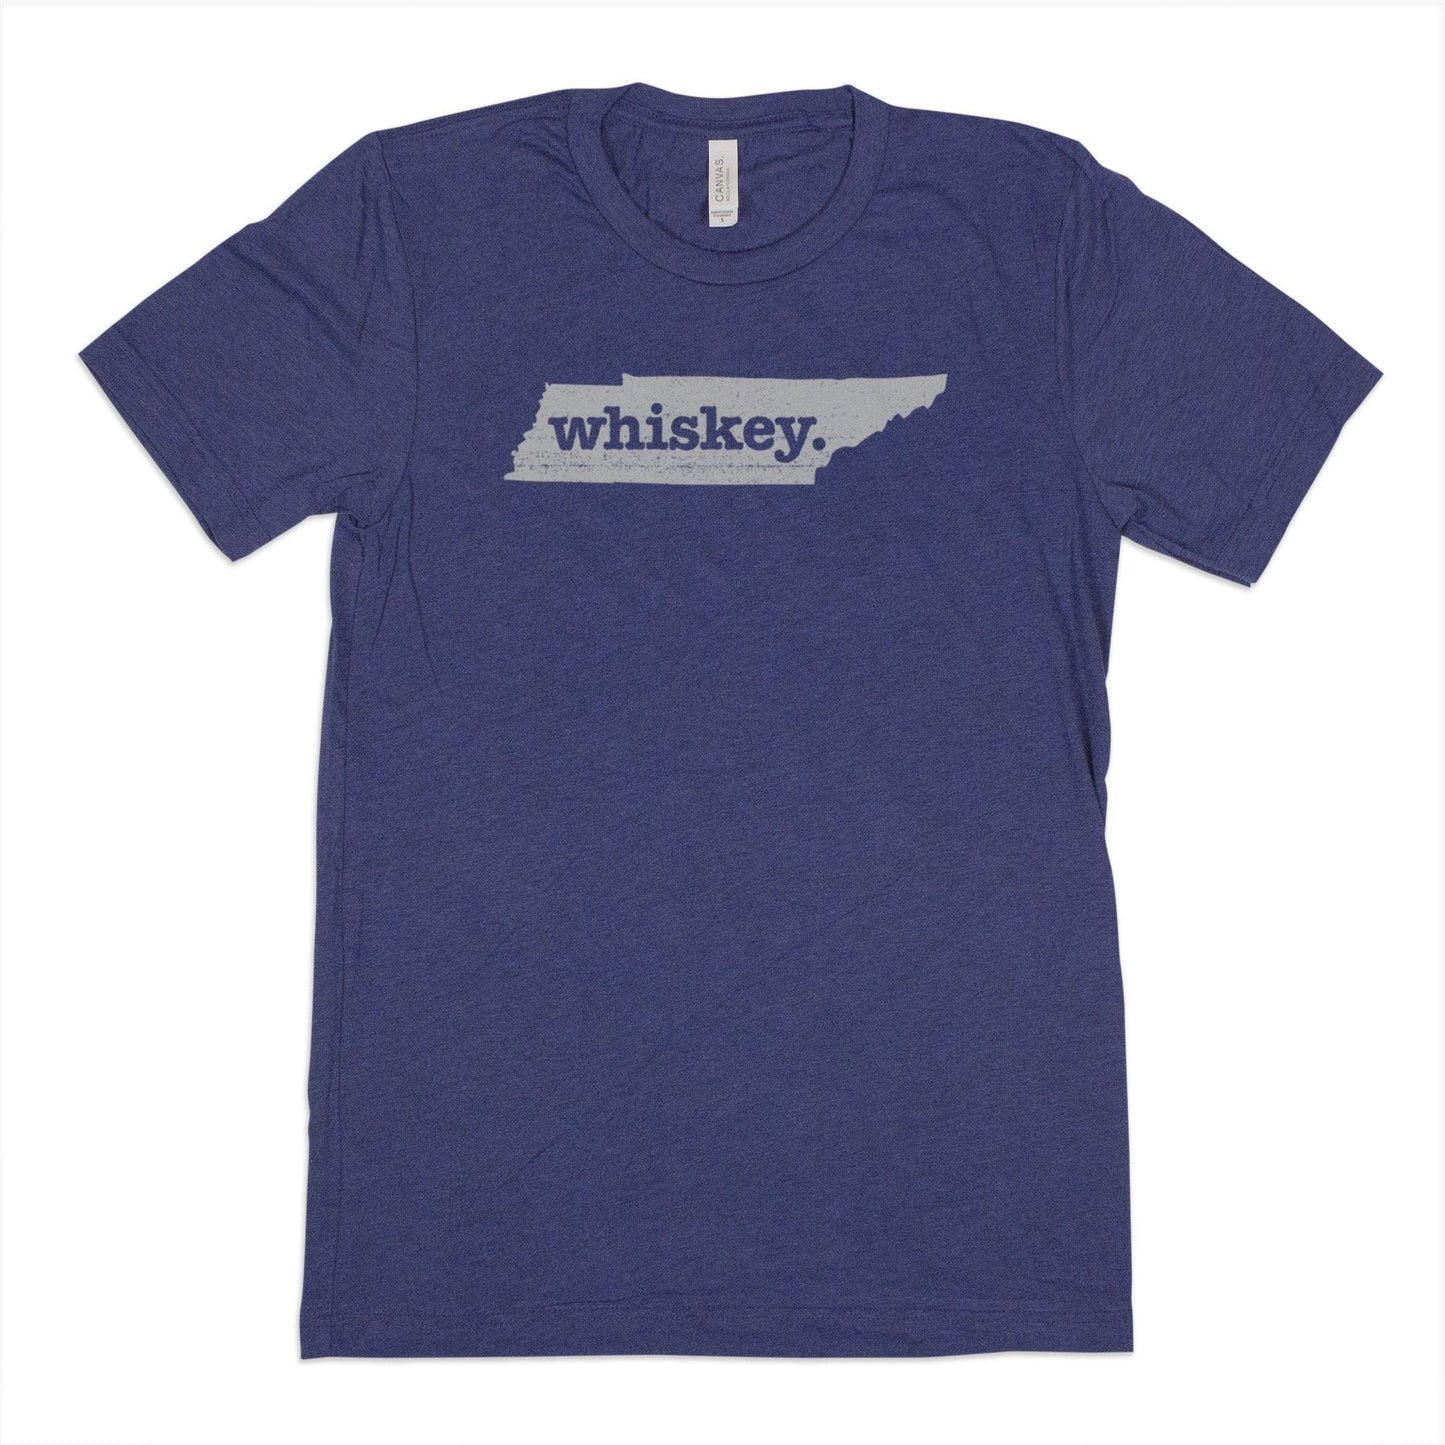 beer. Men's Unisex T-Shirt - Washington